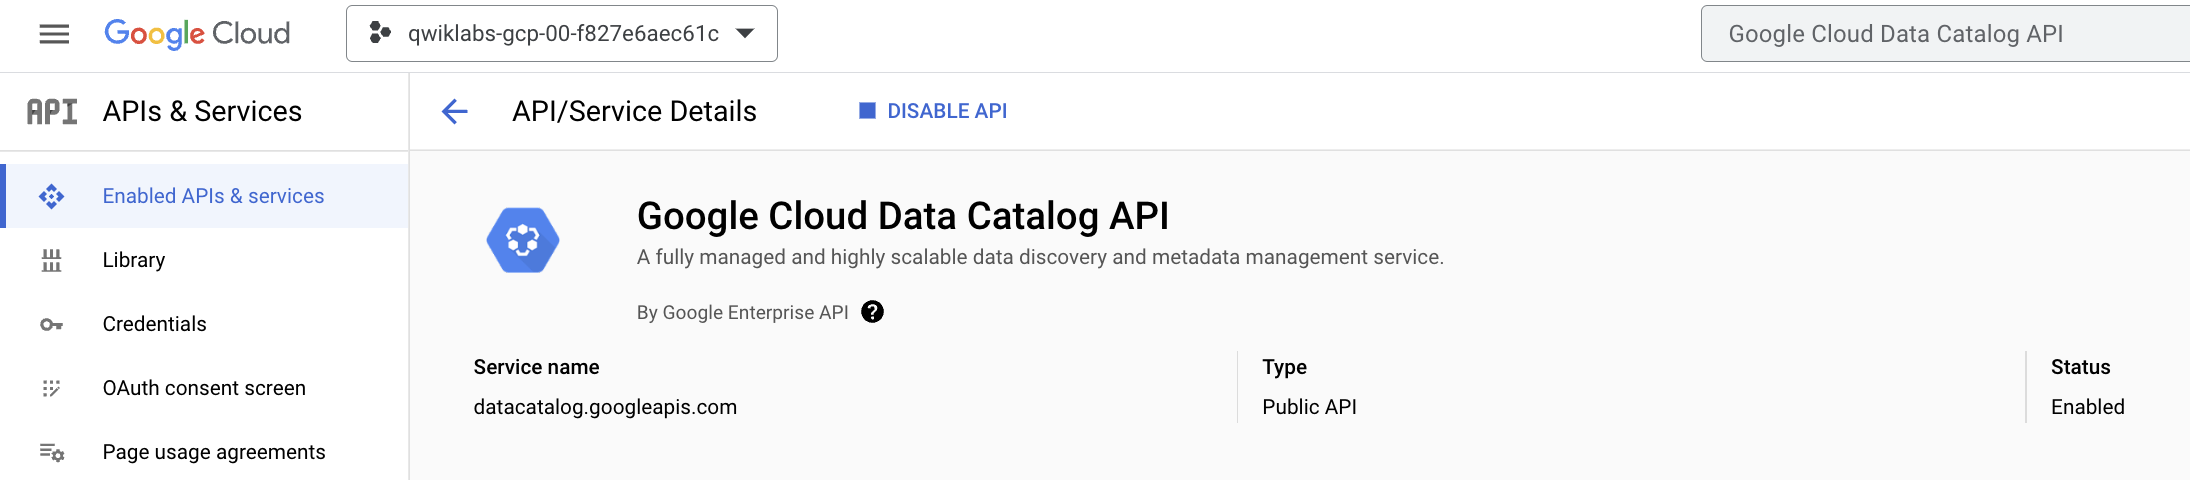 Google Cloud Data Catalog window showing the Data Catalog API overview